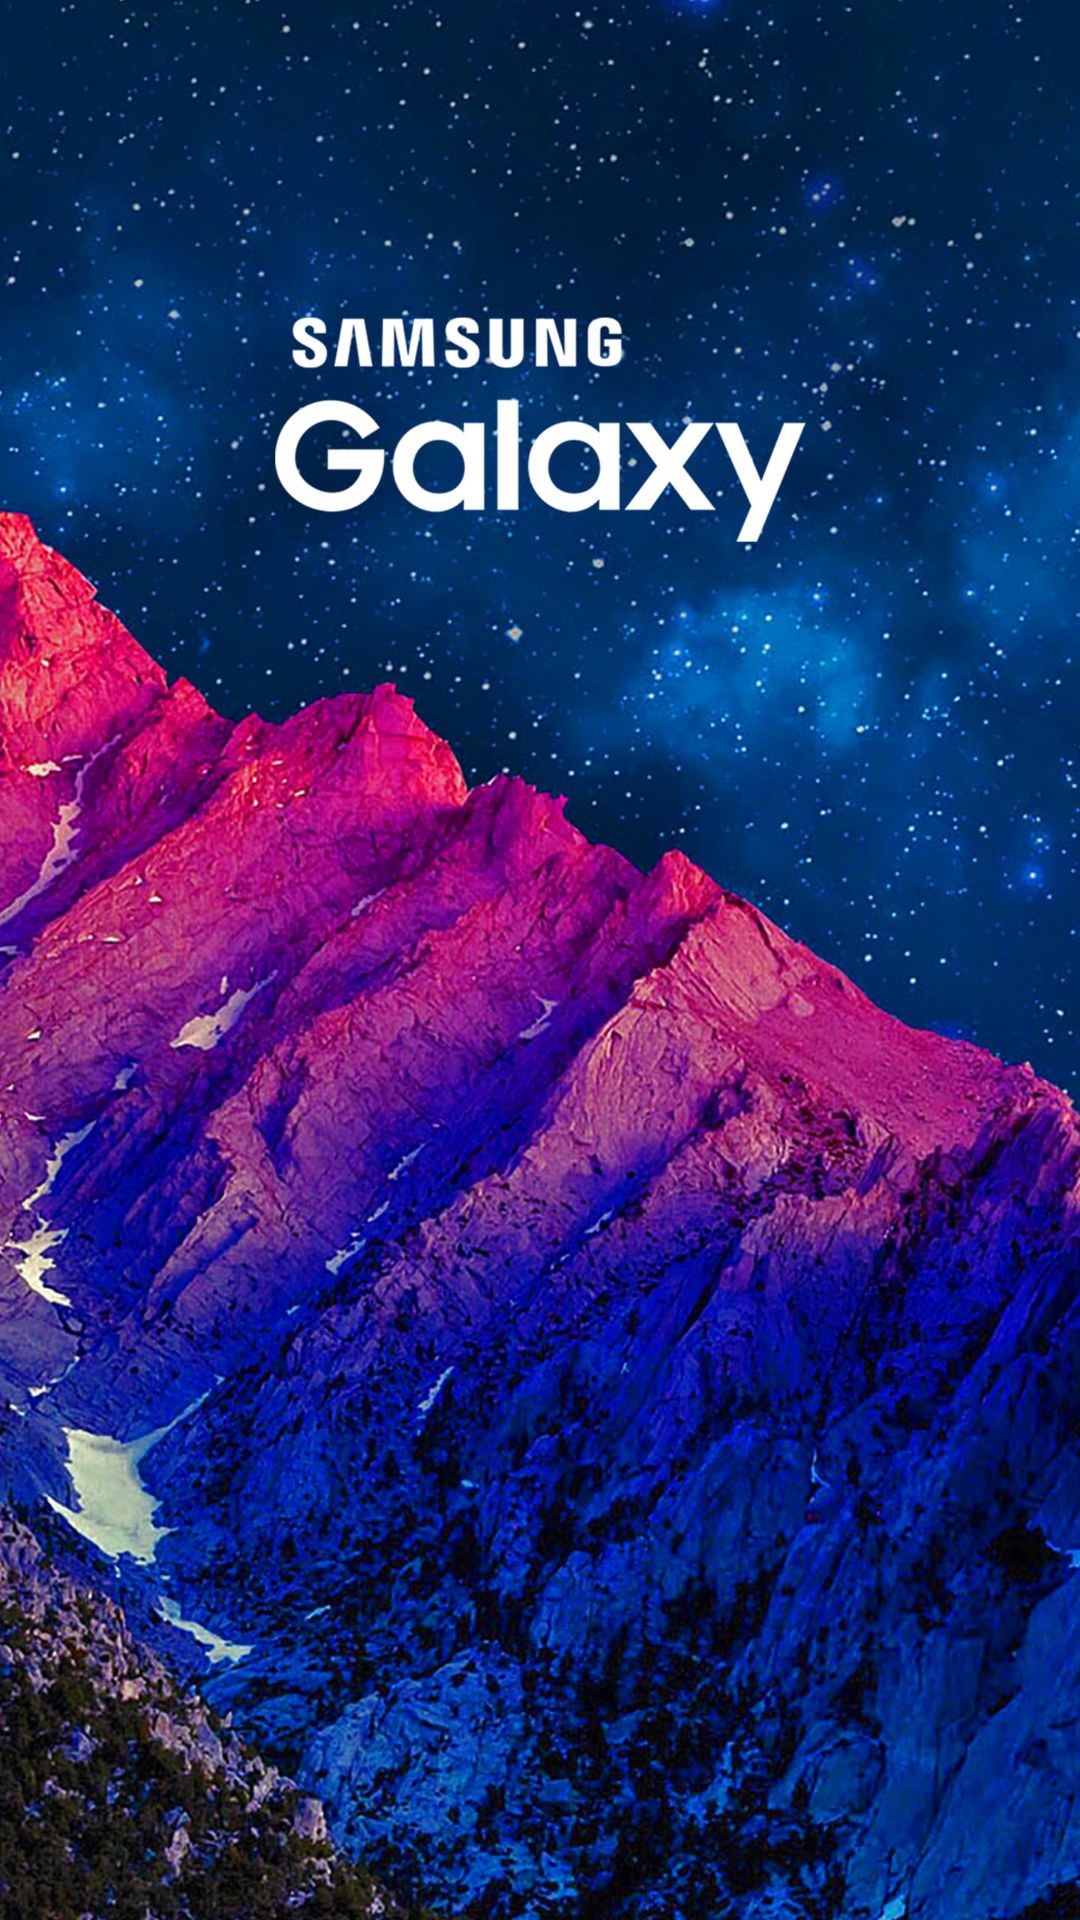 samsung galaxy logo hd wallpaper